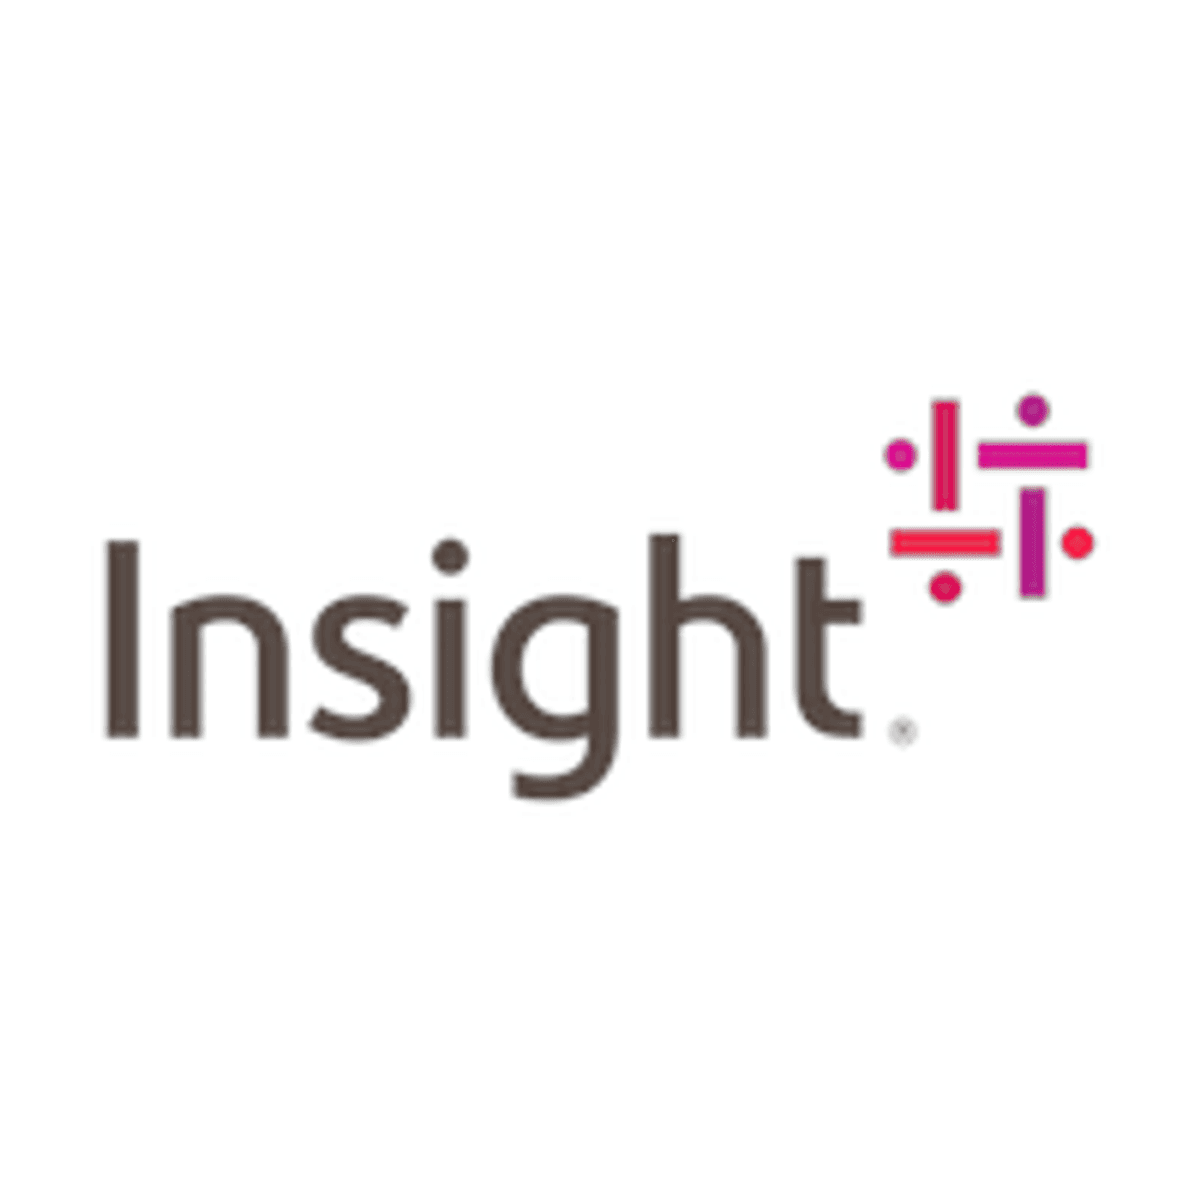 Insight wint een drietal Microsoft Worldwide Partner Awards image